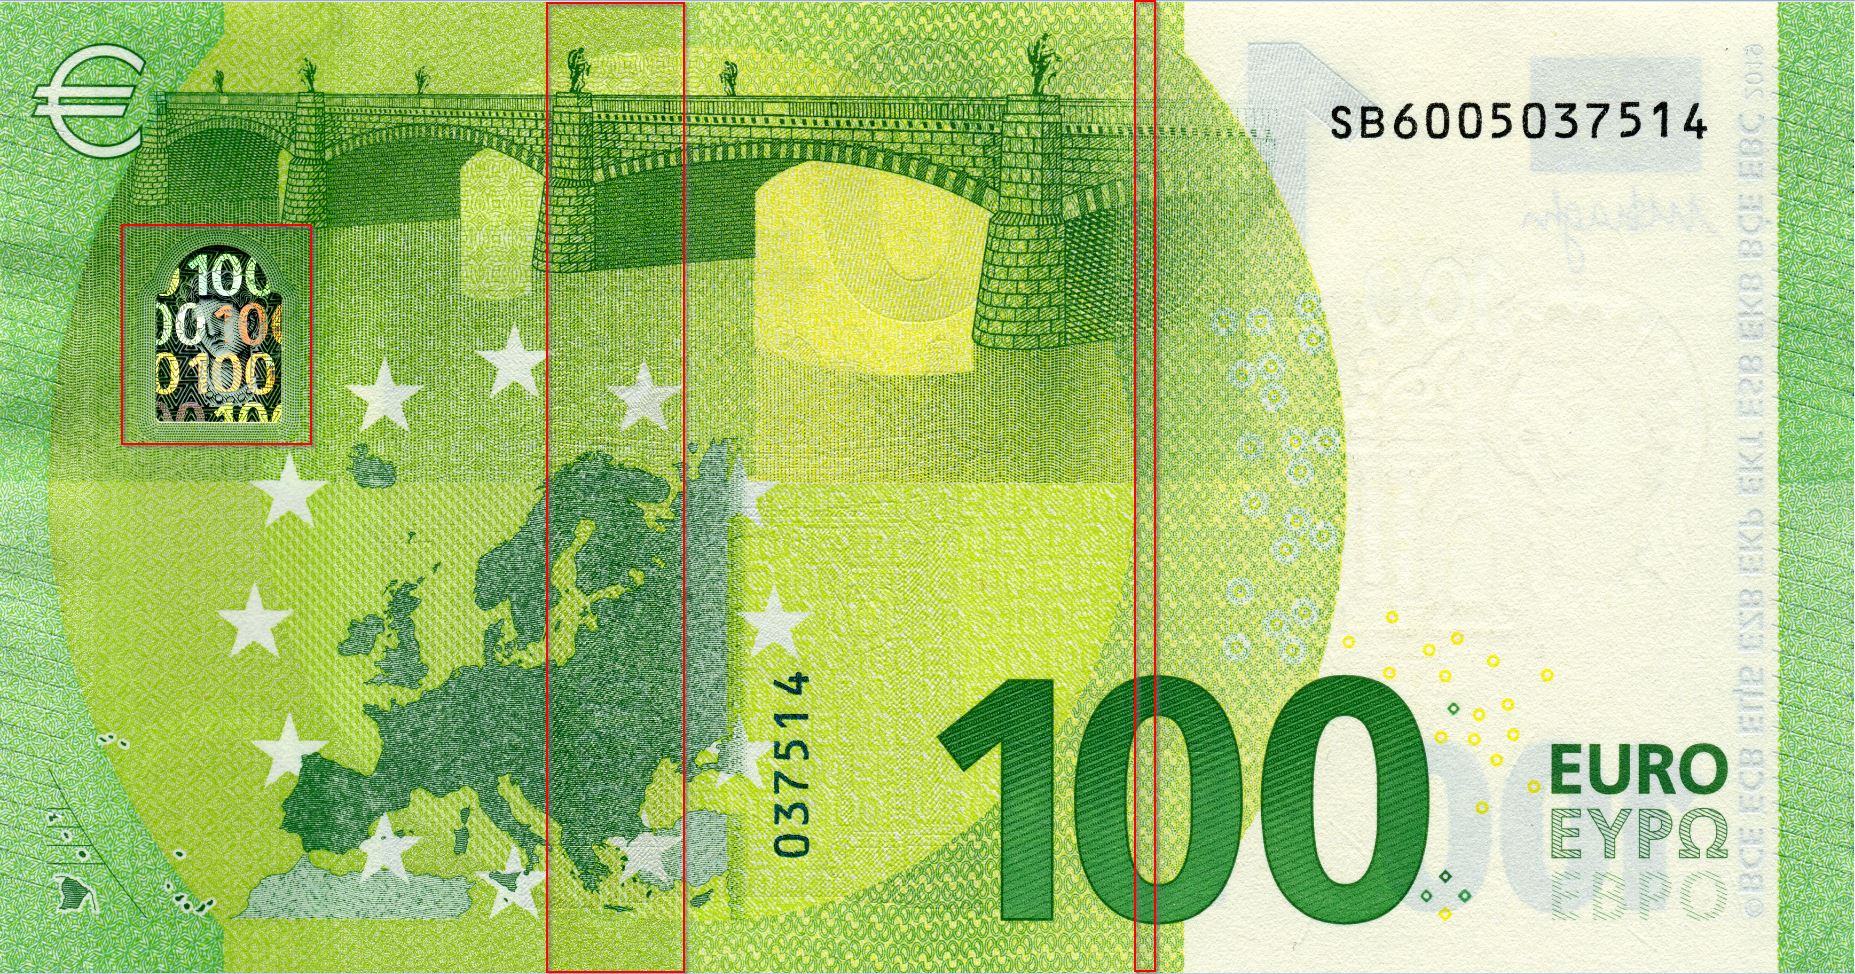 100 euro banknote Europa series - reverse side